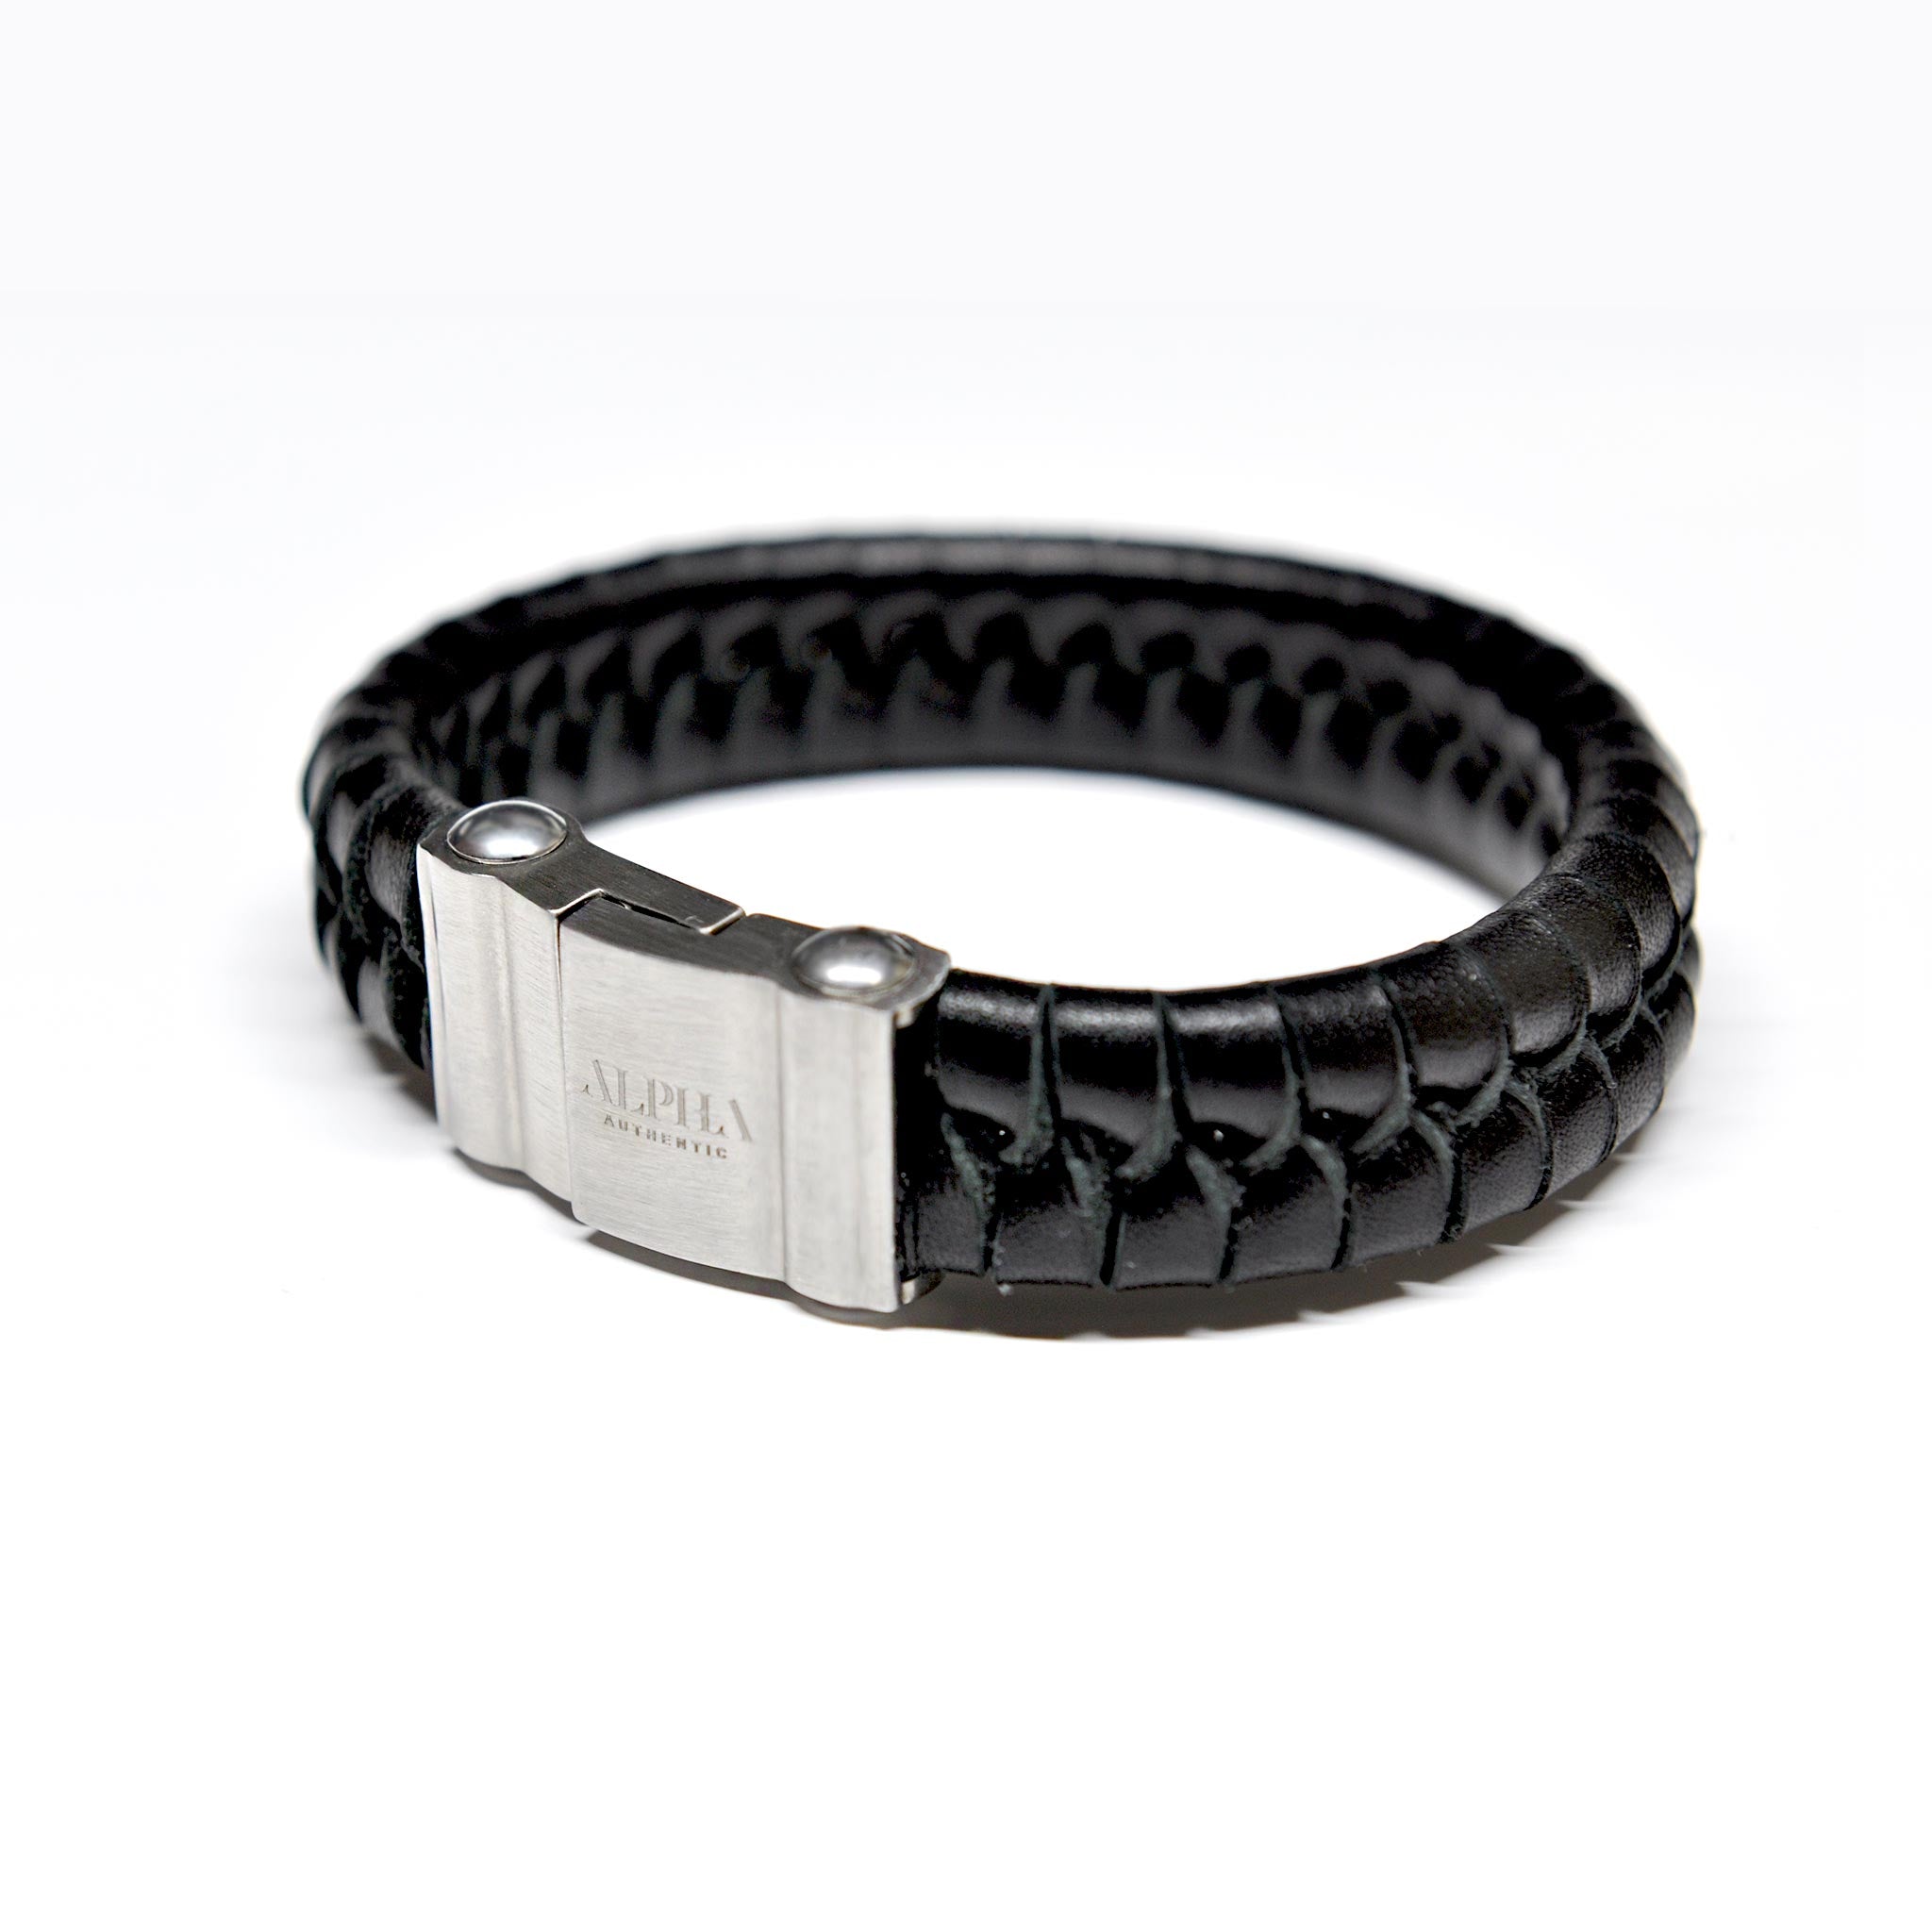 Mens leather bracelets